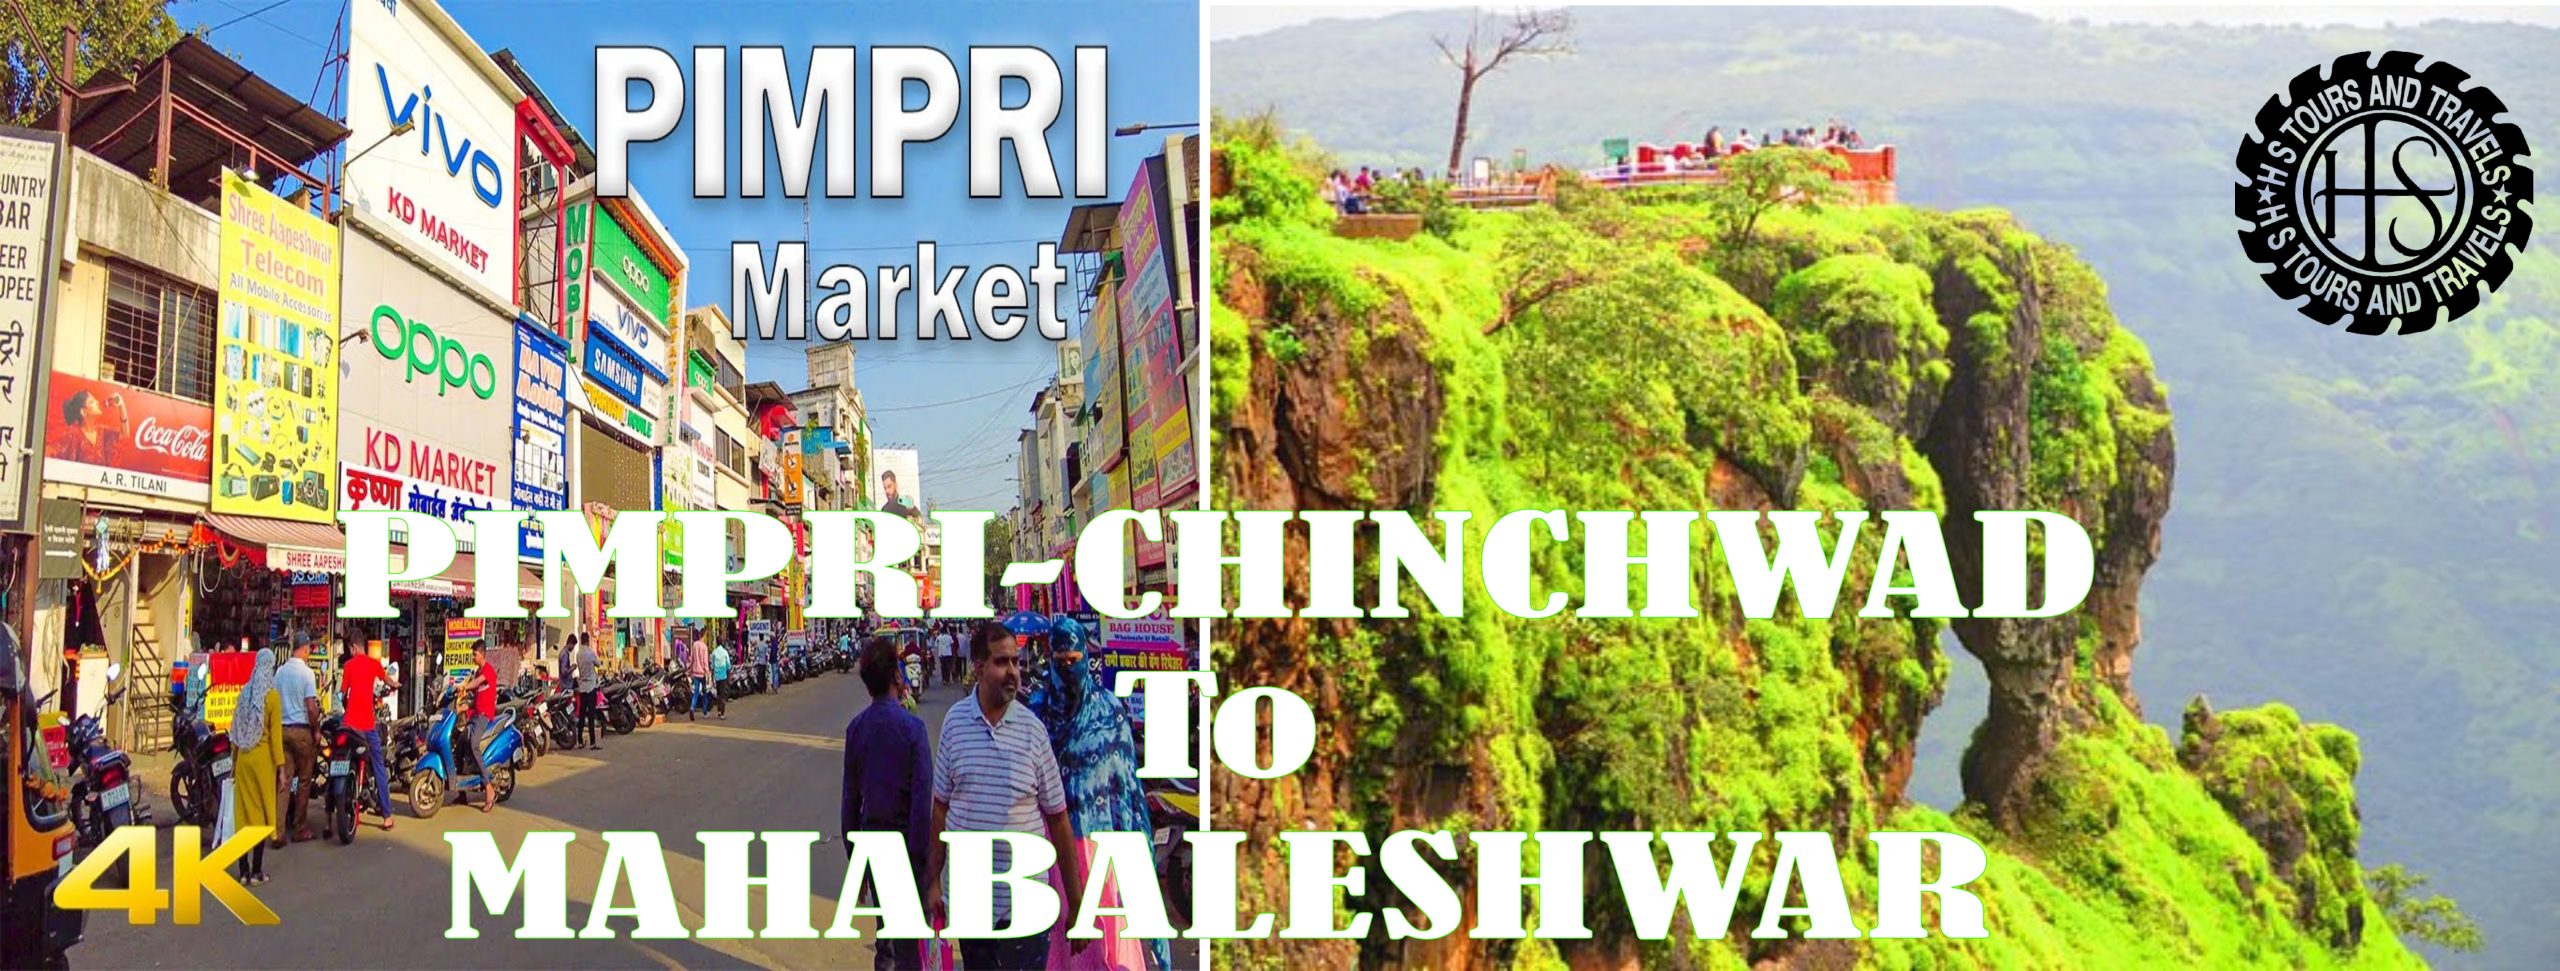 Pimpri-Chinchwad To Mahabaleshwar Cab Services